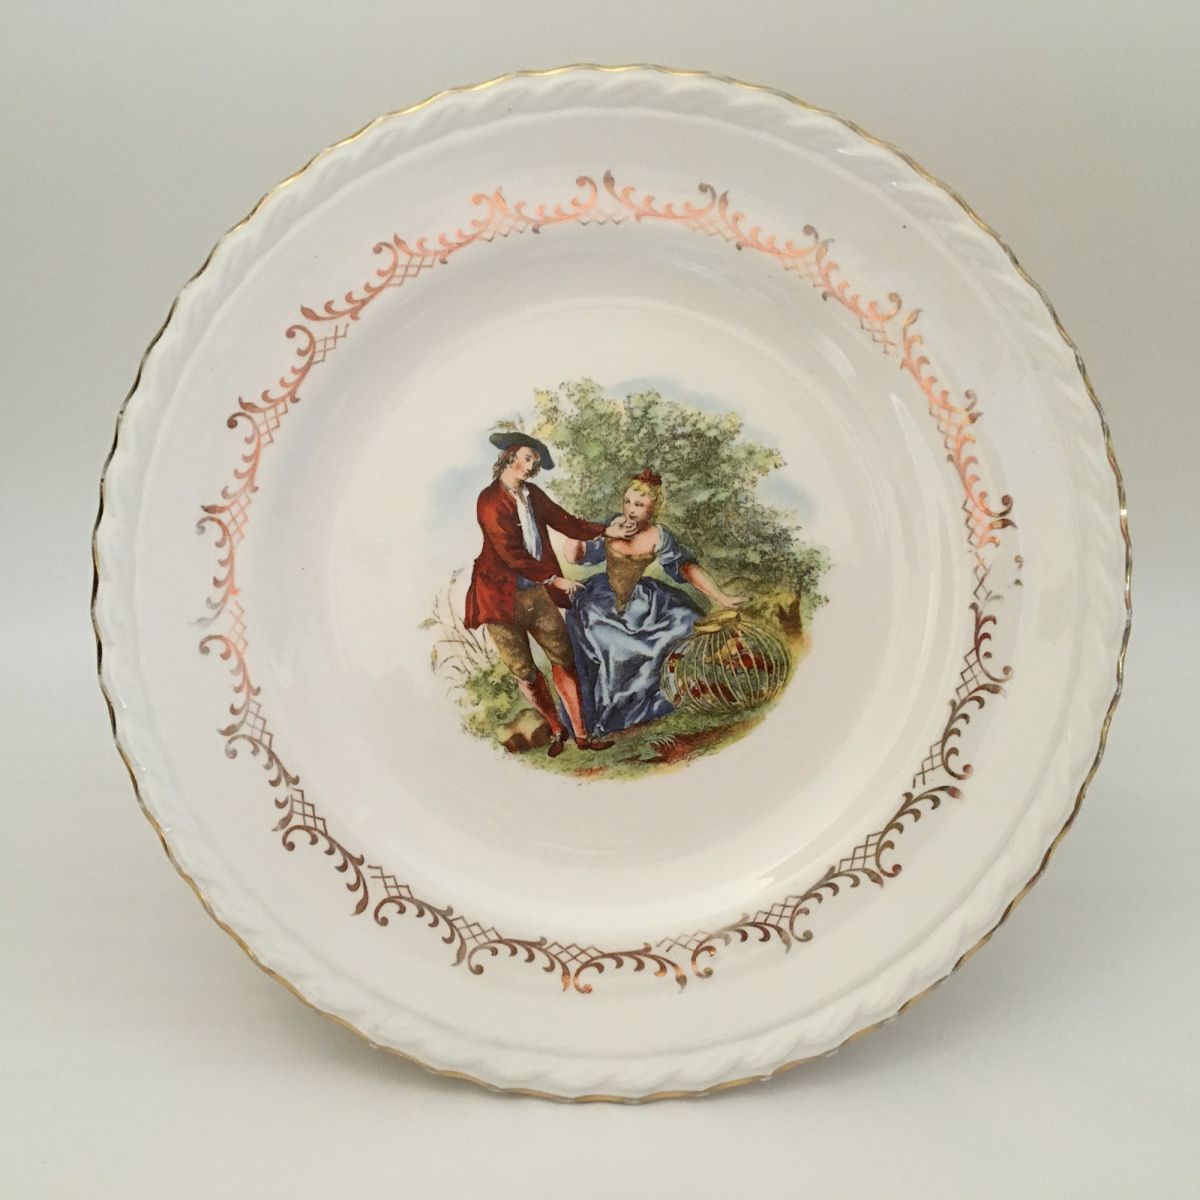 6 Assiettes Plates “L'Amandinoise”, Style Fragonard – Luckyfind